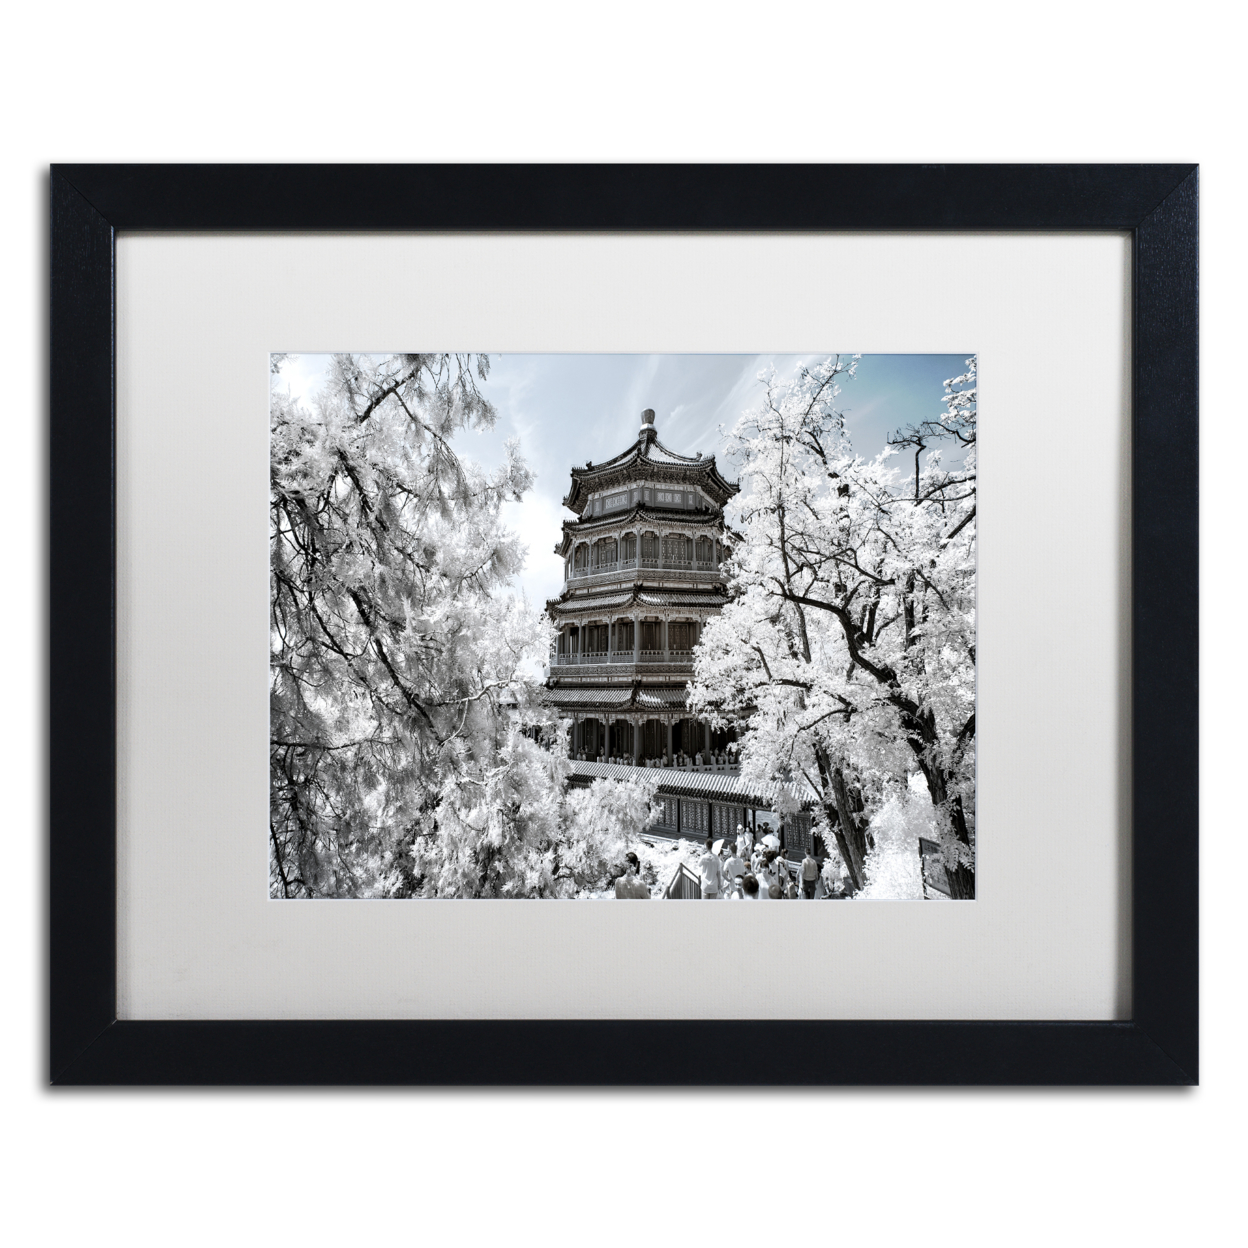 Philippe Hugonnard 'White Temple I' Black Wooden Framed Art 18 X 22 Inches